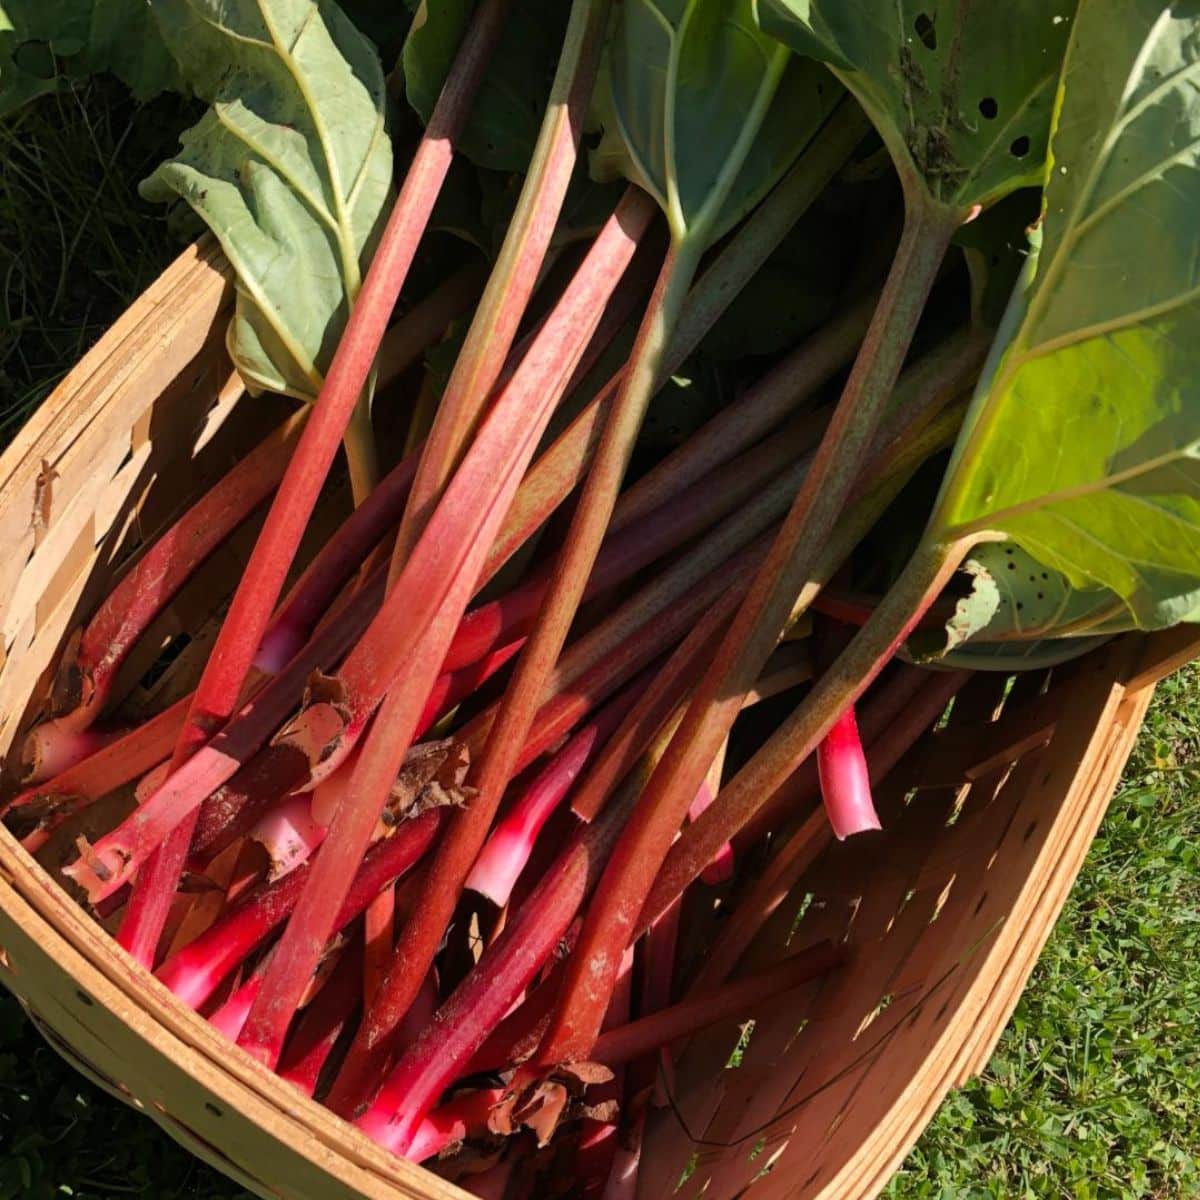 A basket full of harvested rhubarb.